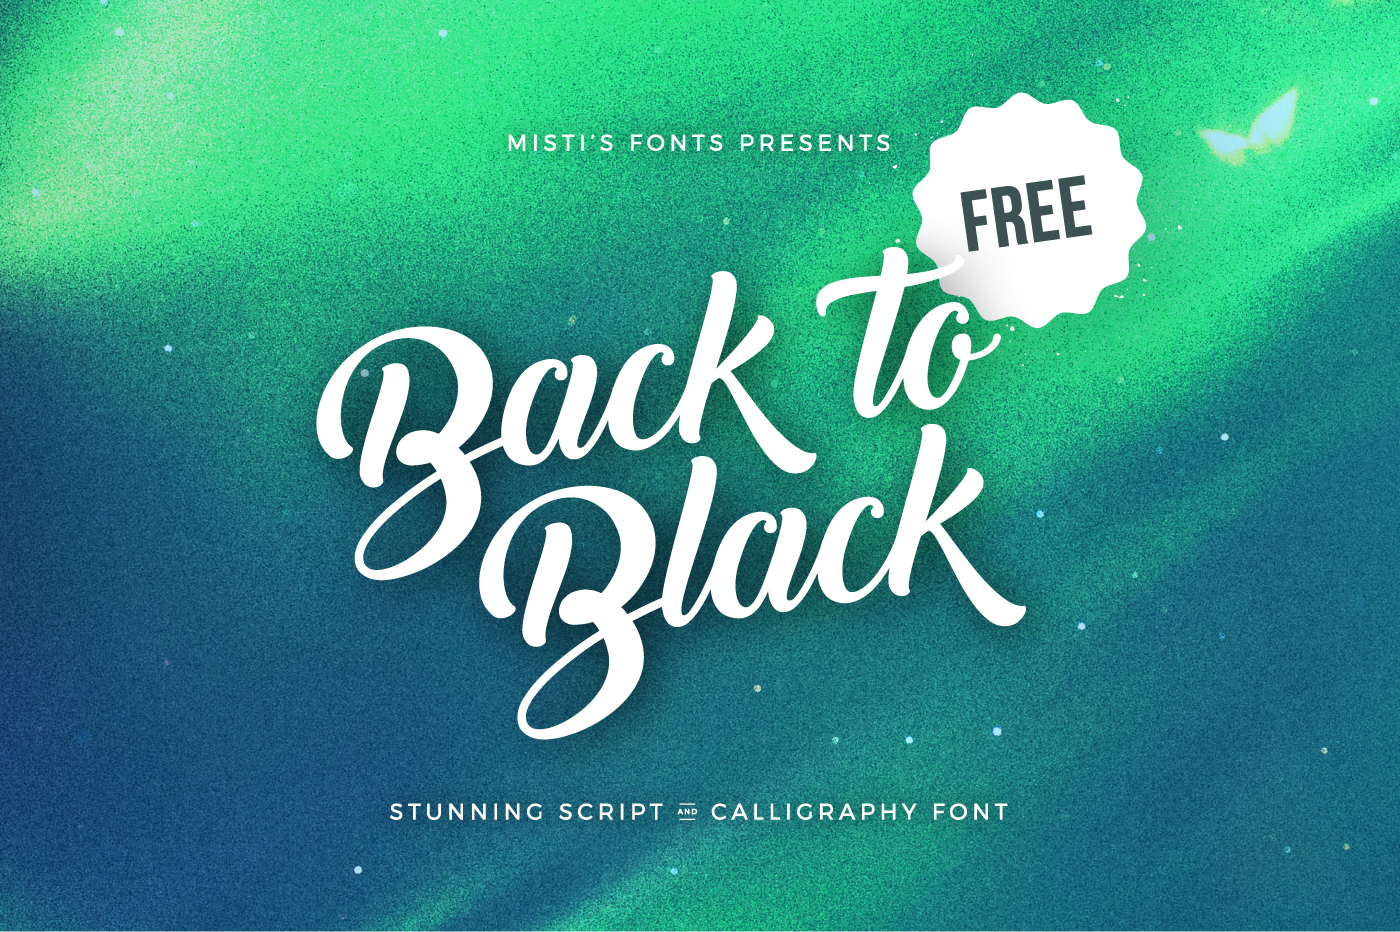 Free Script Font Free font free fonts free font fonts freebie Script type lettering creative inspiration download handwritten Display